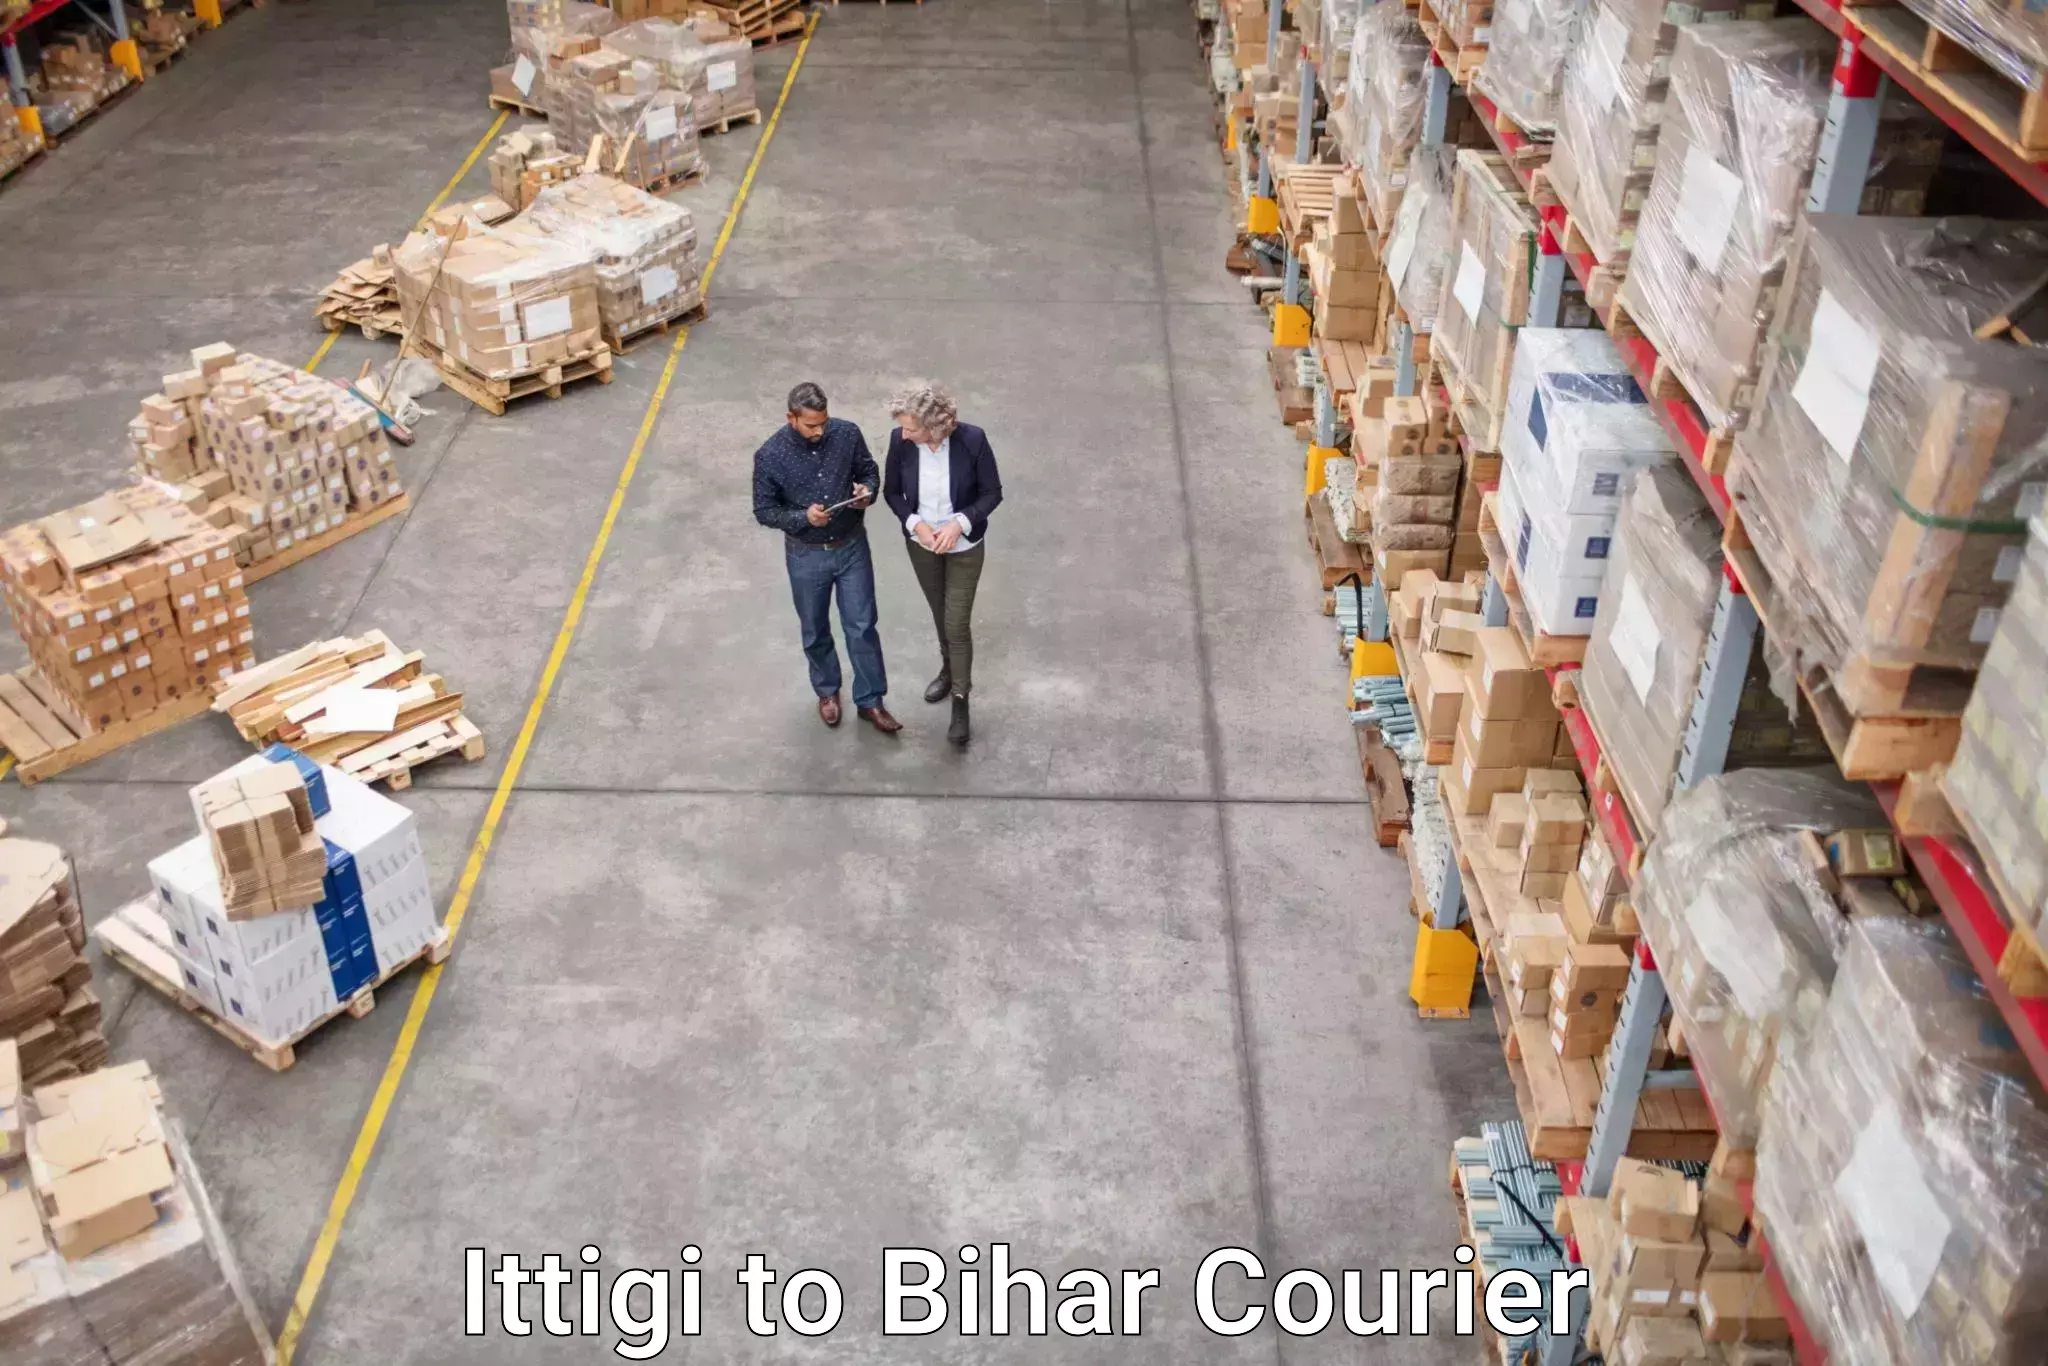 Business delivery service Ittigi to Rajpur